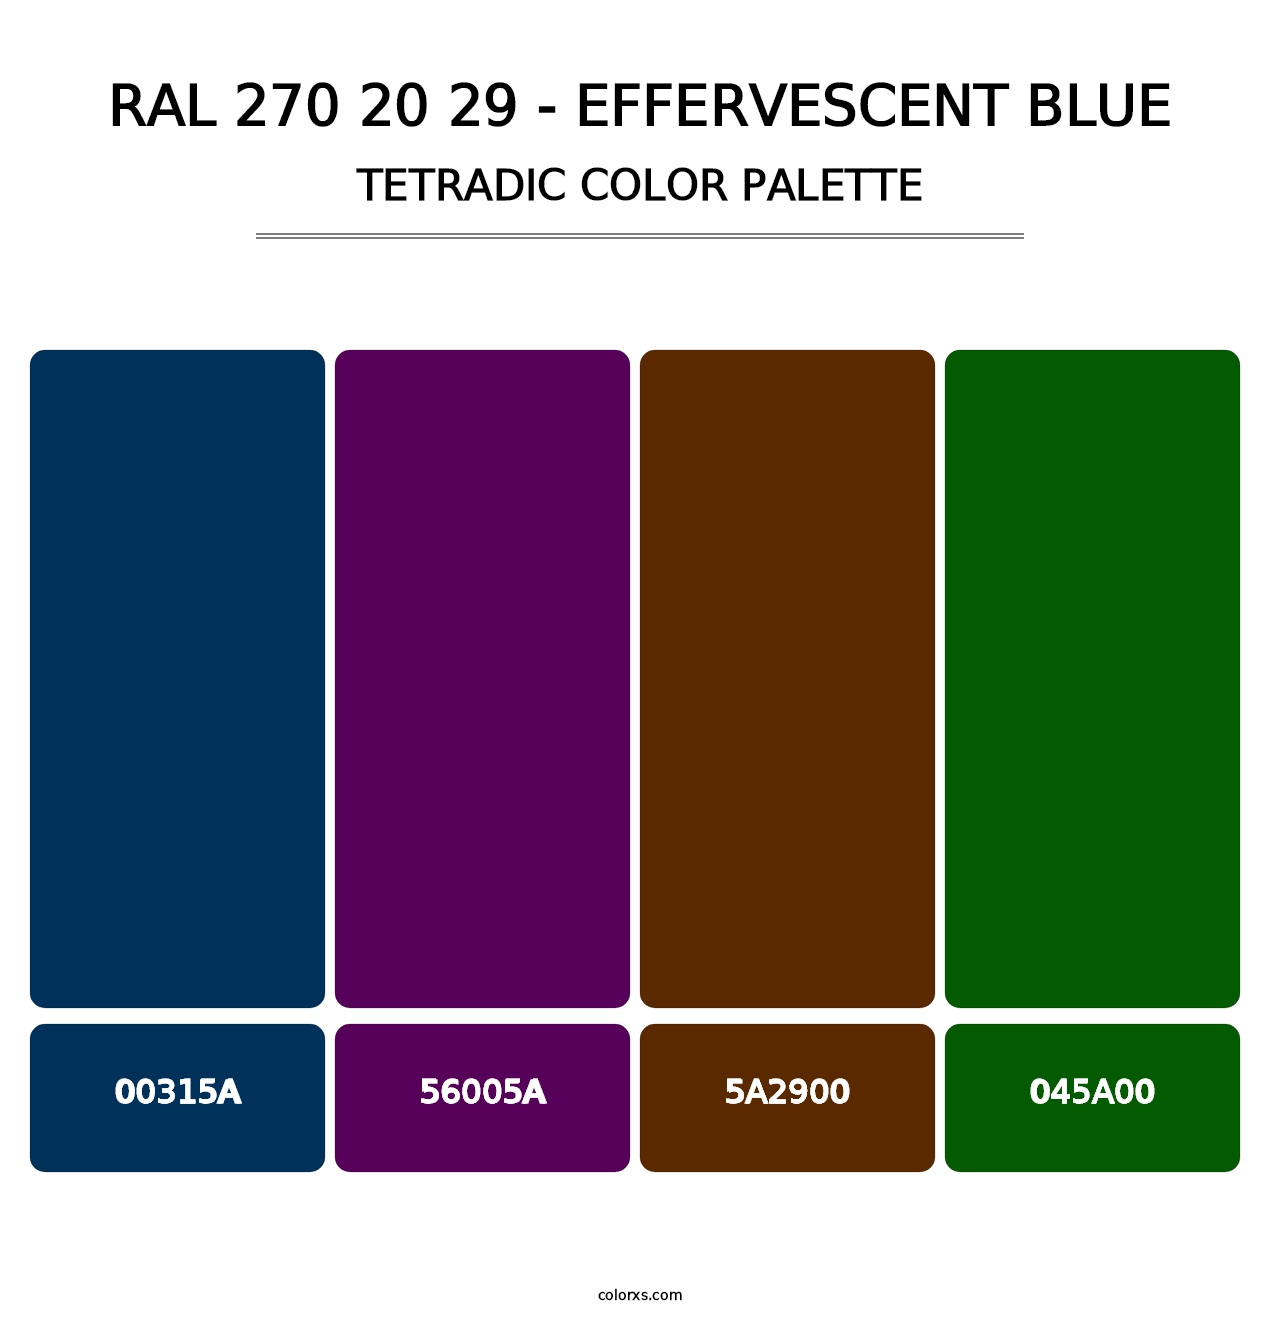 RAL 270 20 29 - Effervescent Blue - Tetradic Color Palette